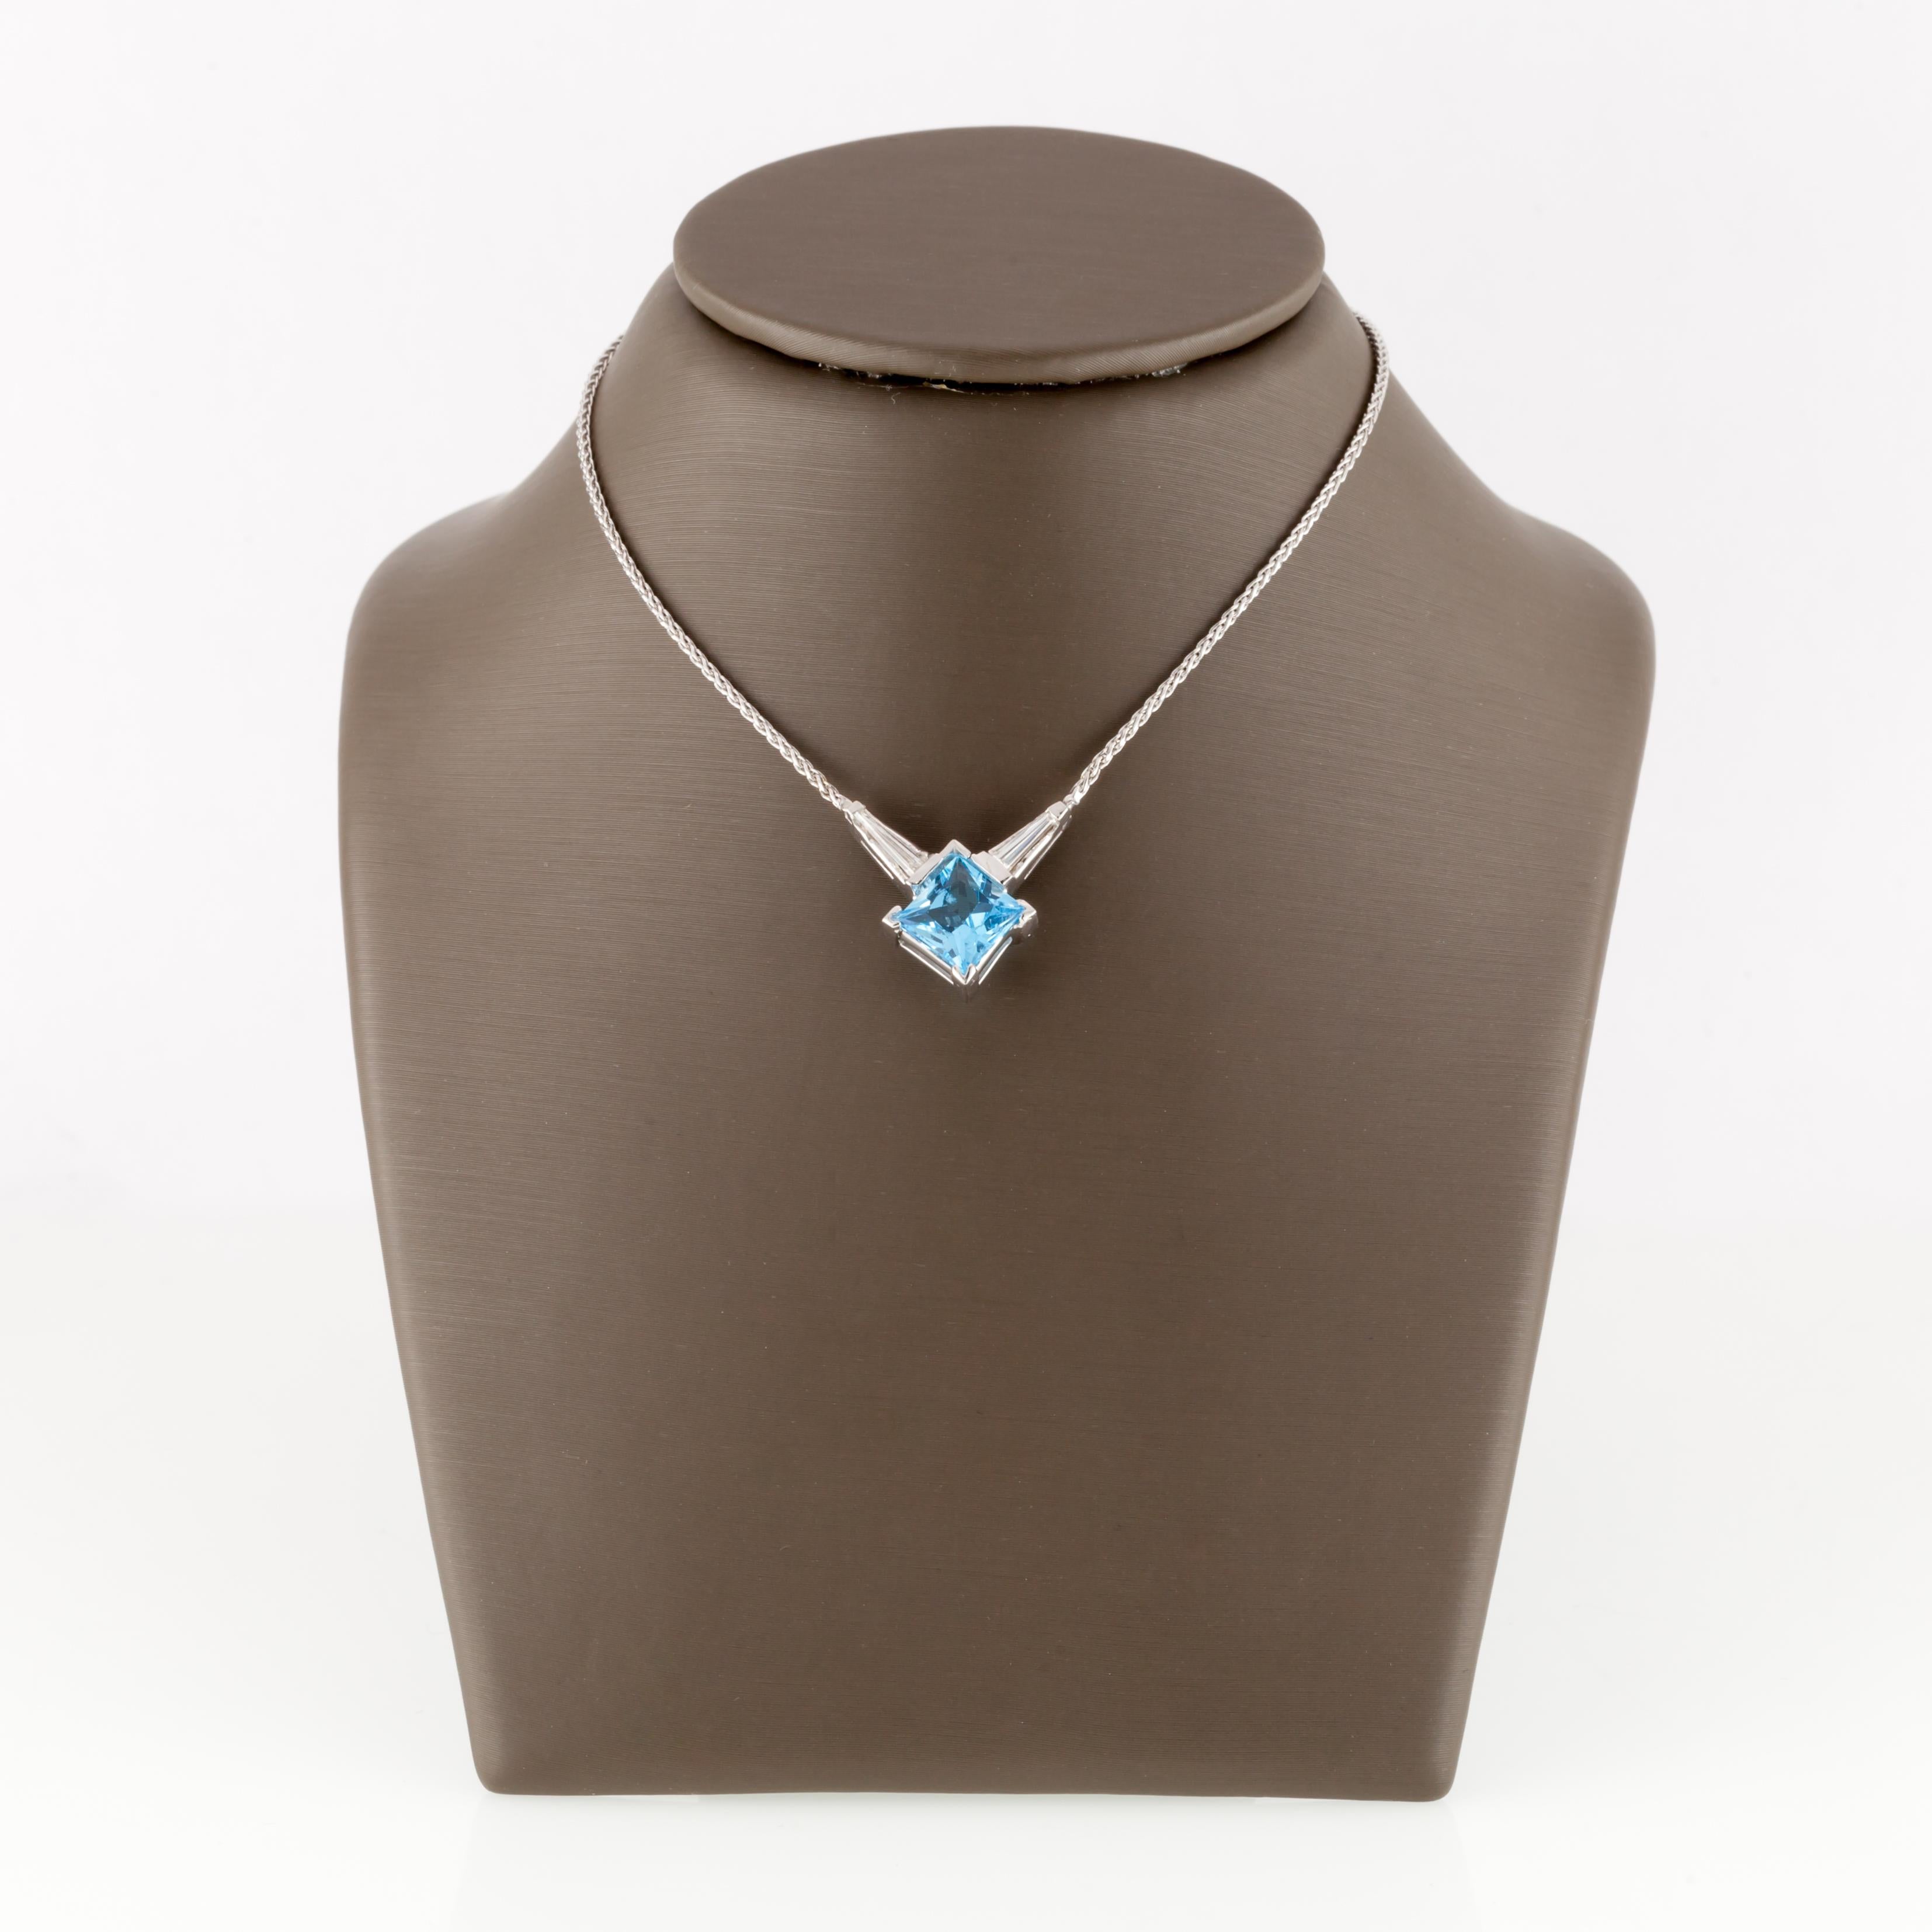 Princess Cut 14k White Gold Blue Topaz Pendant with 0.25 Carat Diamond Accents & Gold Chain For Sale